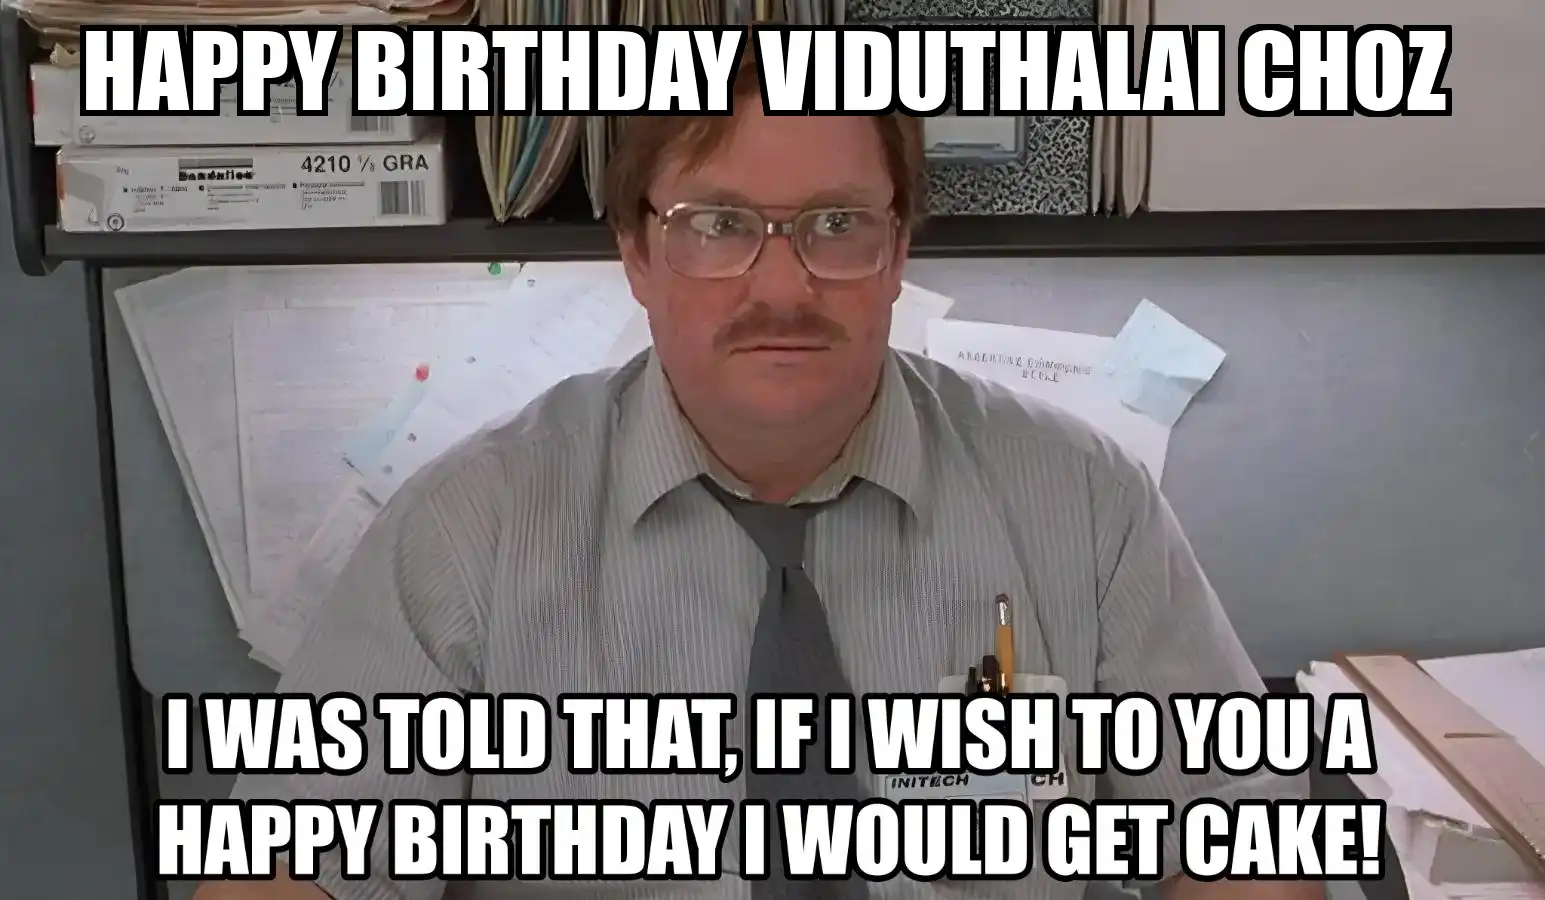 Happy Birthday Viduthalai choz I Would Get A Cake Meme